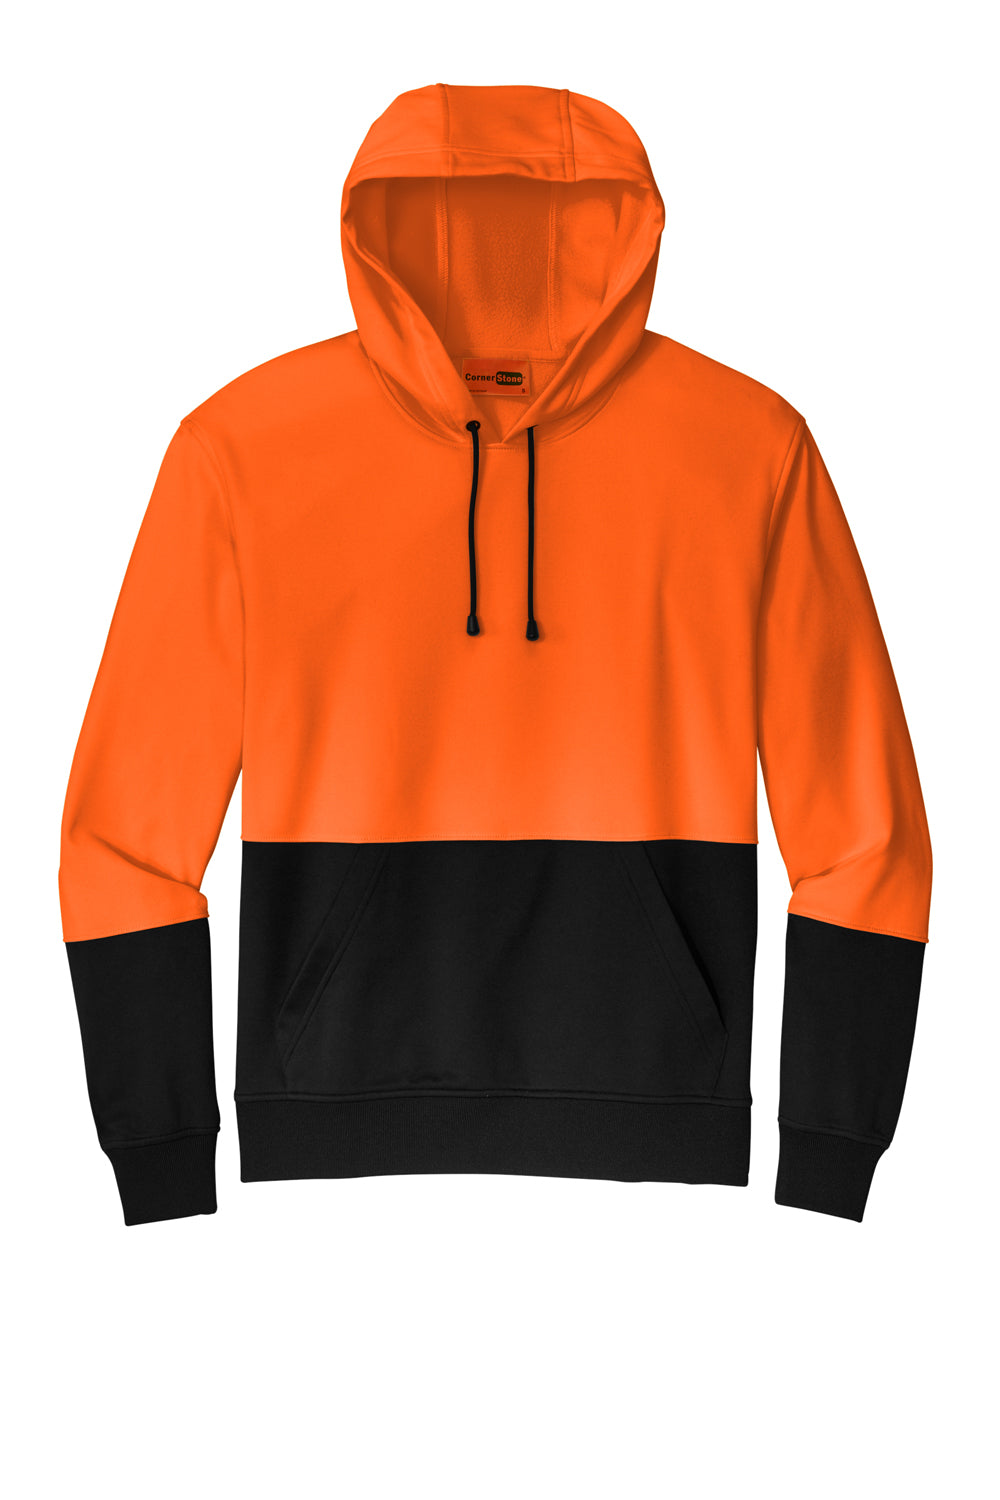 CornerStone CSF01 Enhanced Visibility Fleece Hooded Sweatshirt Hoodie Safety Orange Flat Front